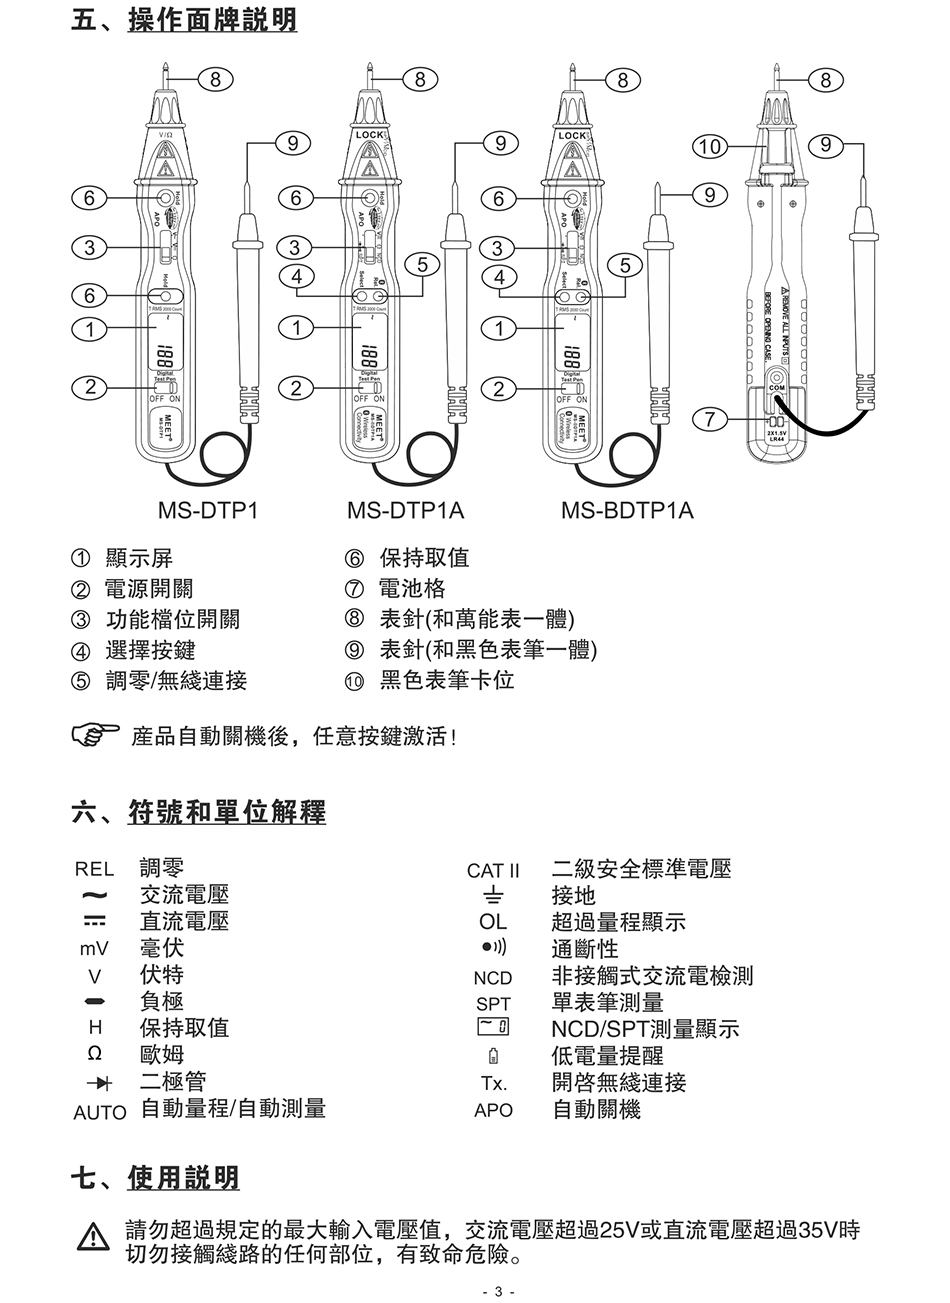 MEET MS-BDTP1A藍牙筆形數字萬用表詳細Catalog介紹（中文）3